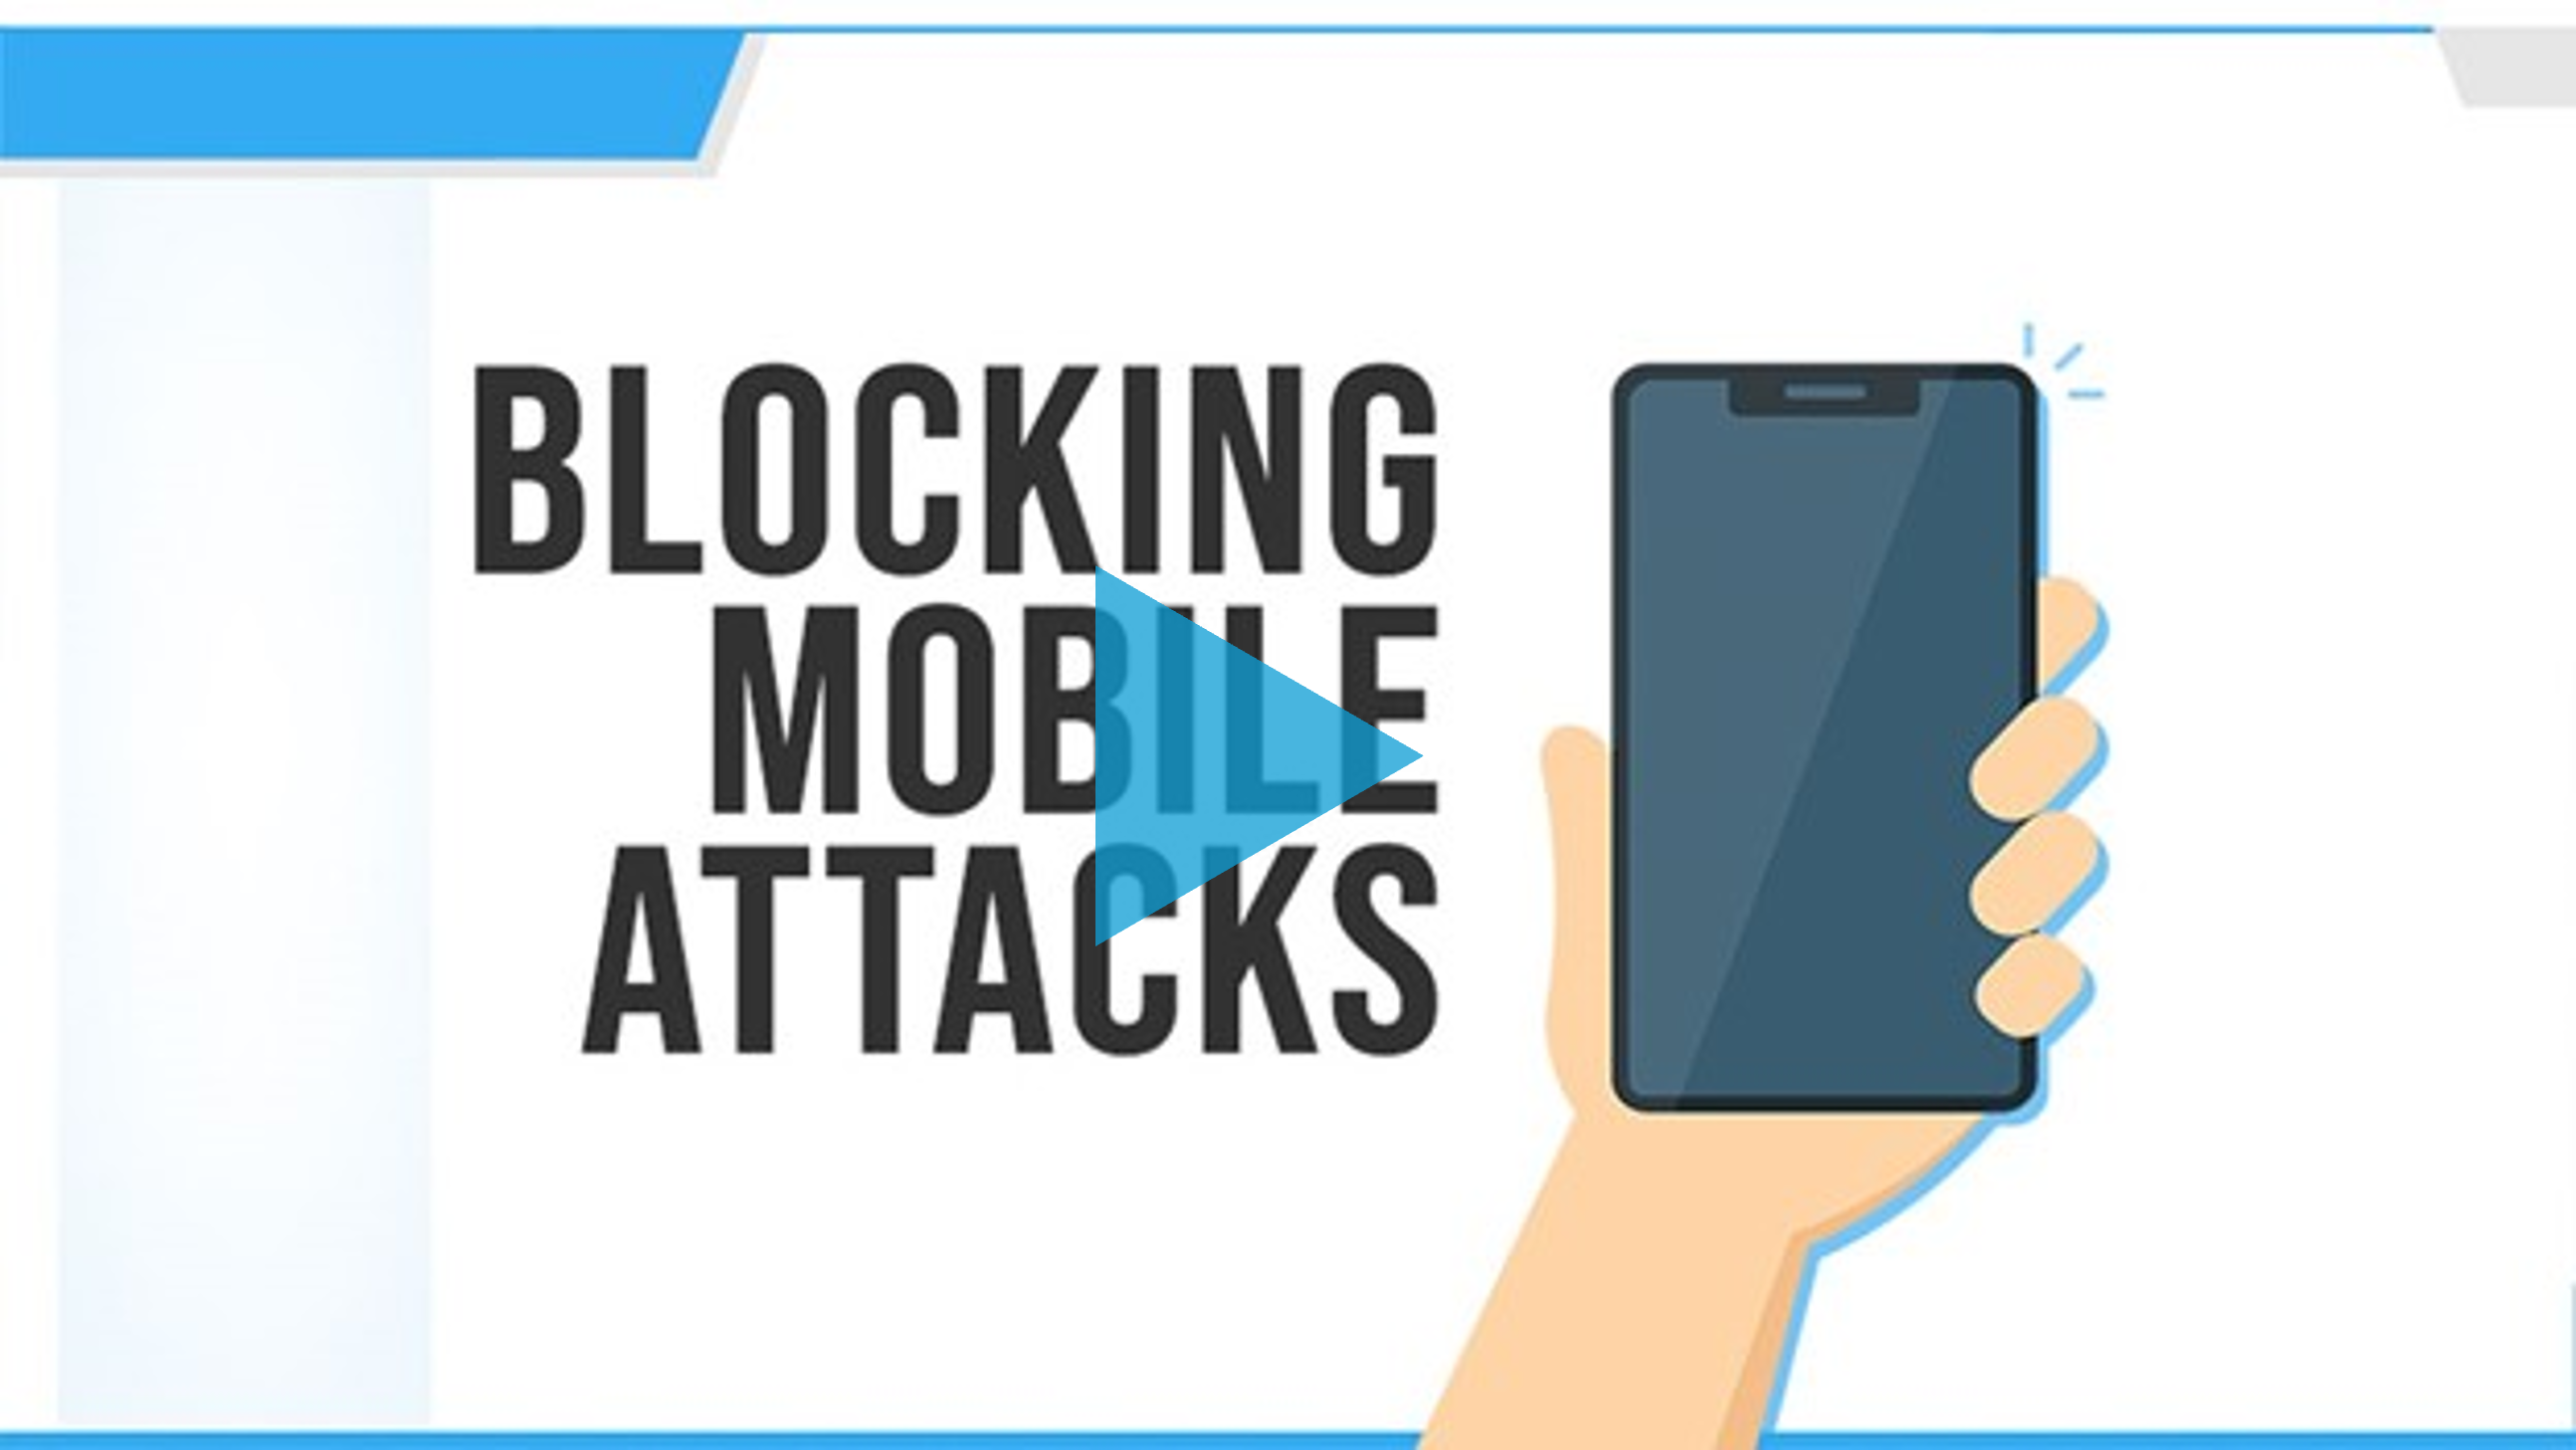 Blocking Mobile Attacks